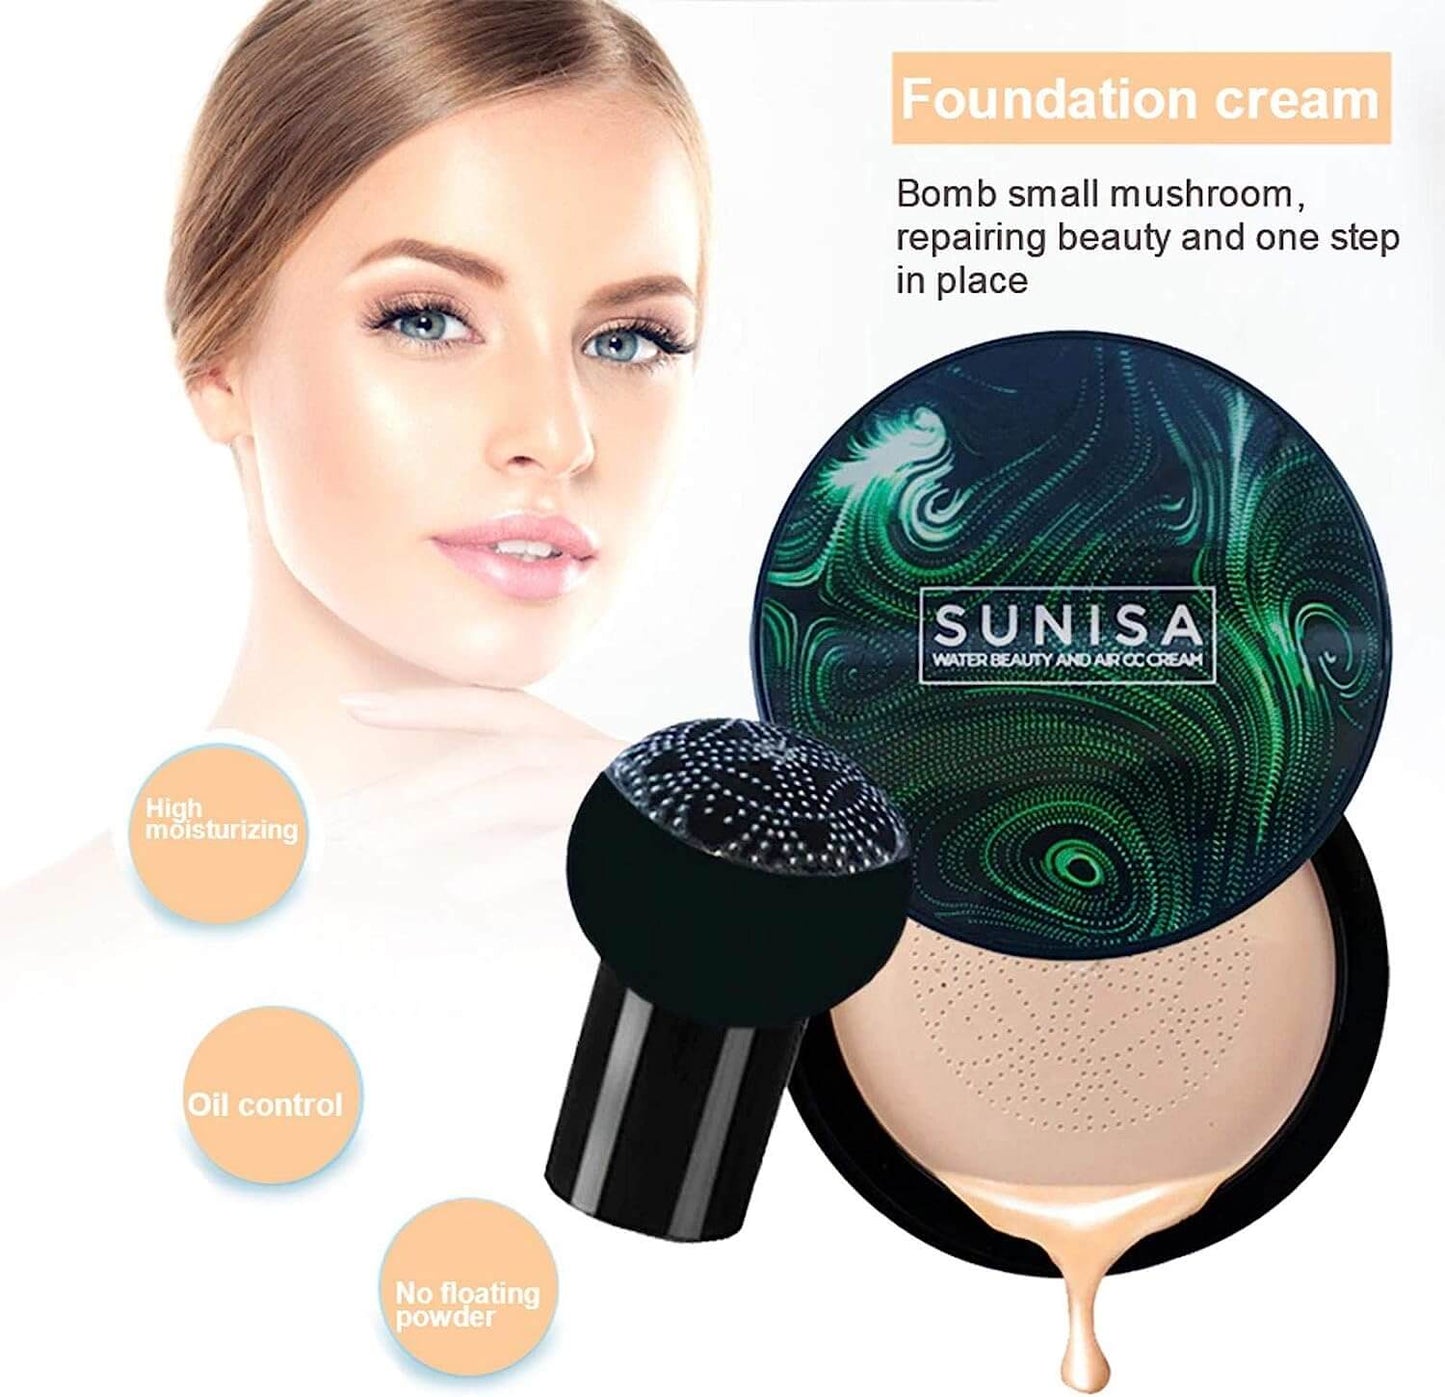 Sunisa Waterproof Foundation Base | Mushroom Head Air Cushion | Bb Cream Nude Liquid Foundations Cc Cream